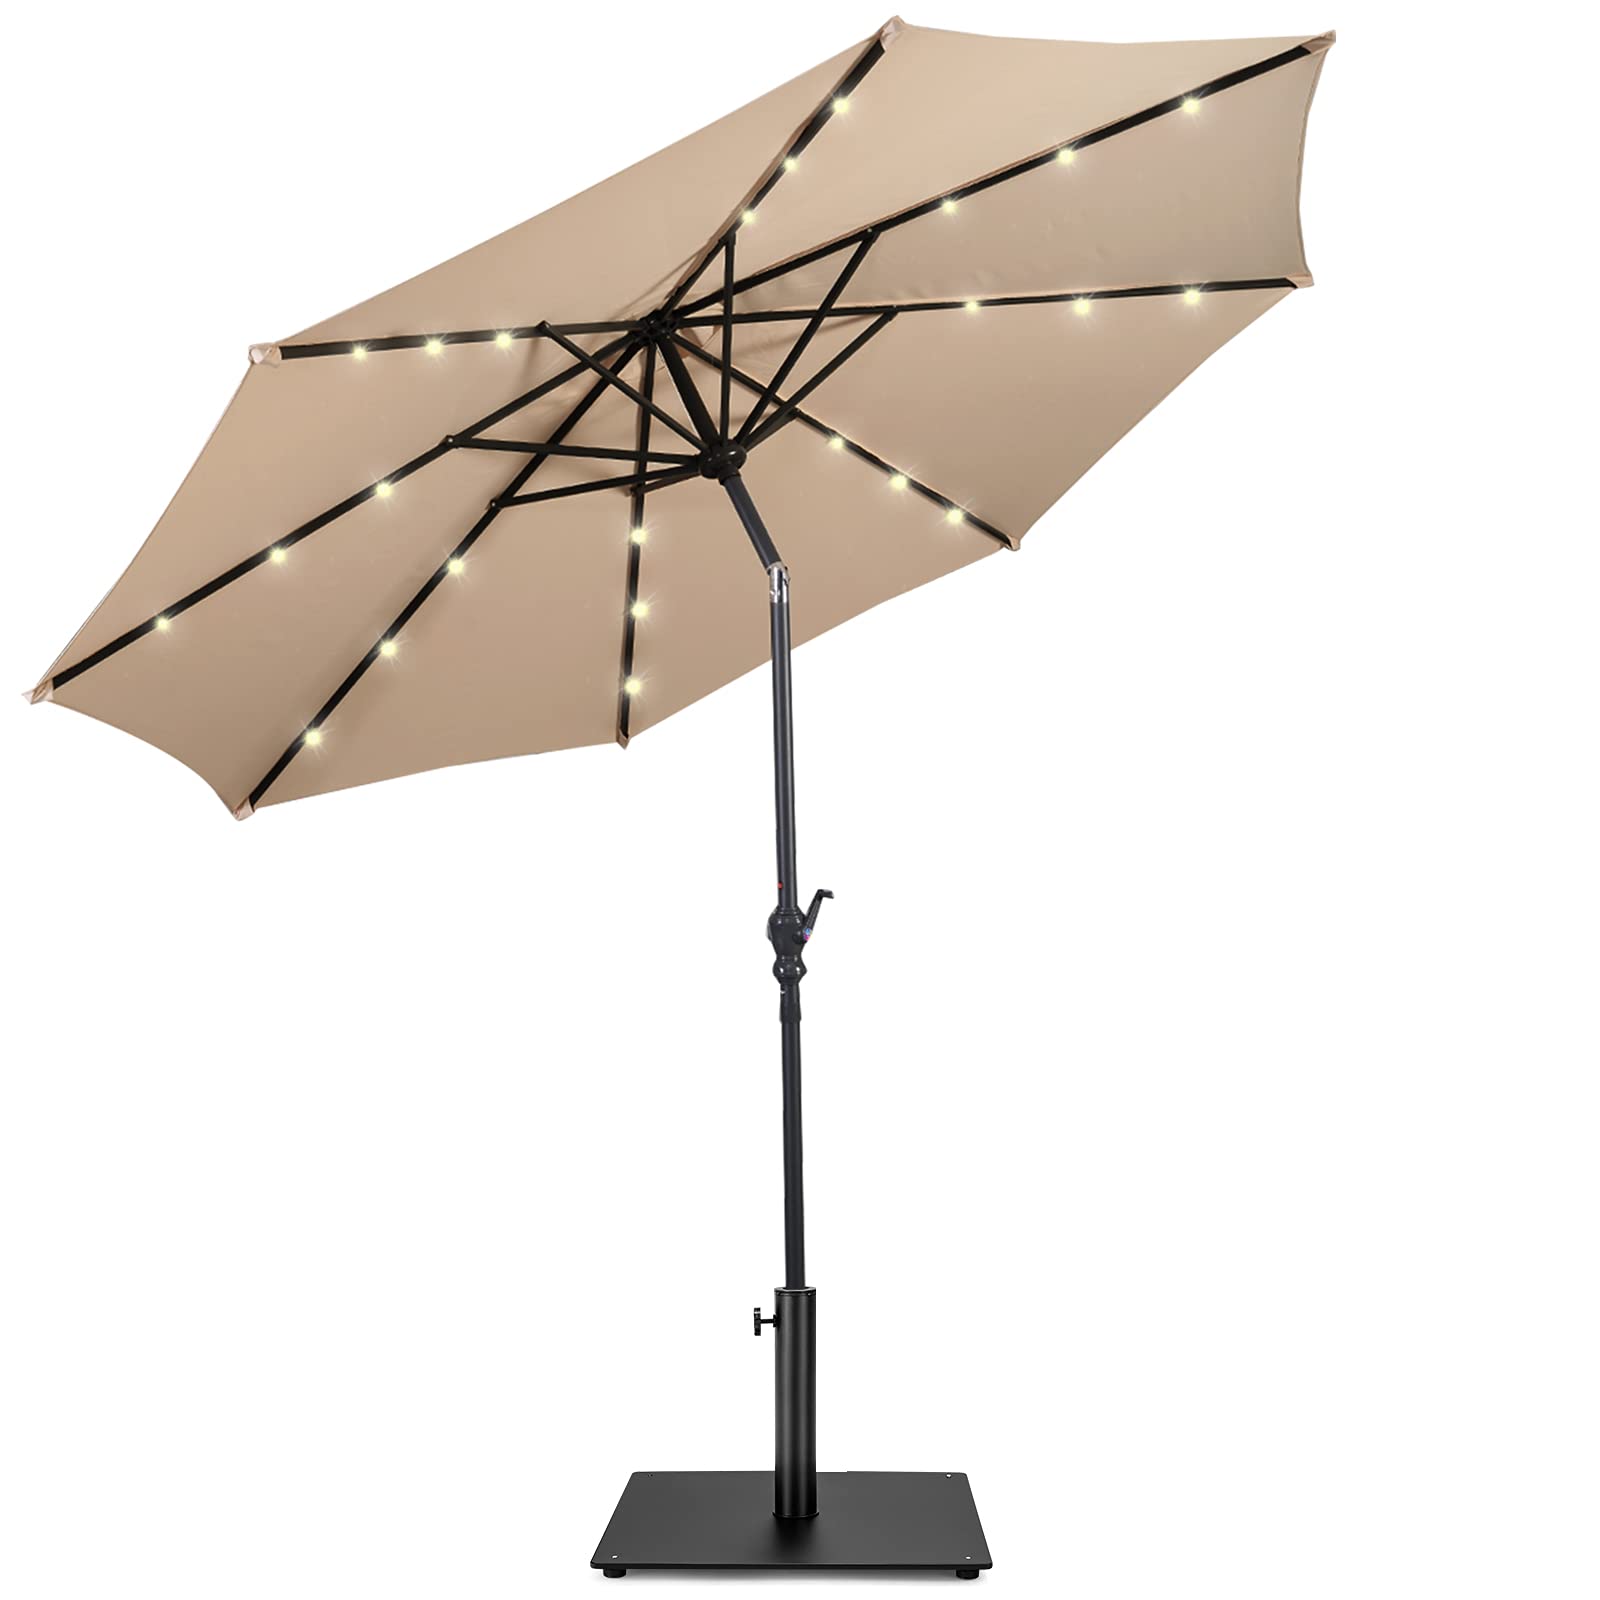 Giantex Patio Umbrella with Base Stand